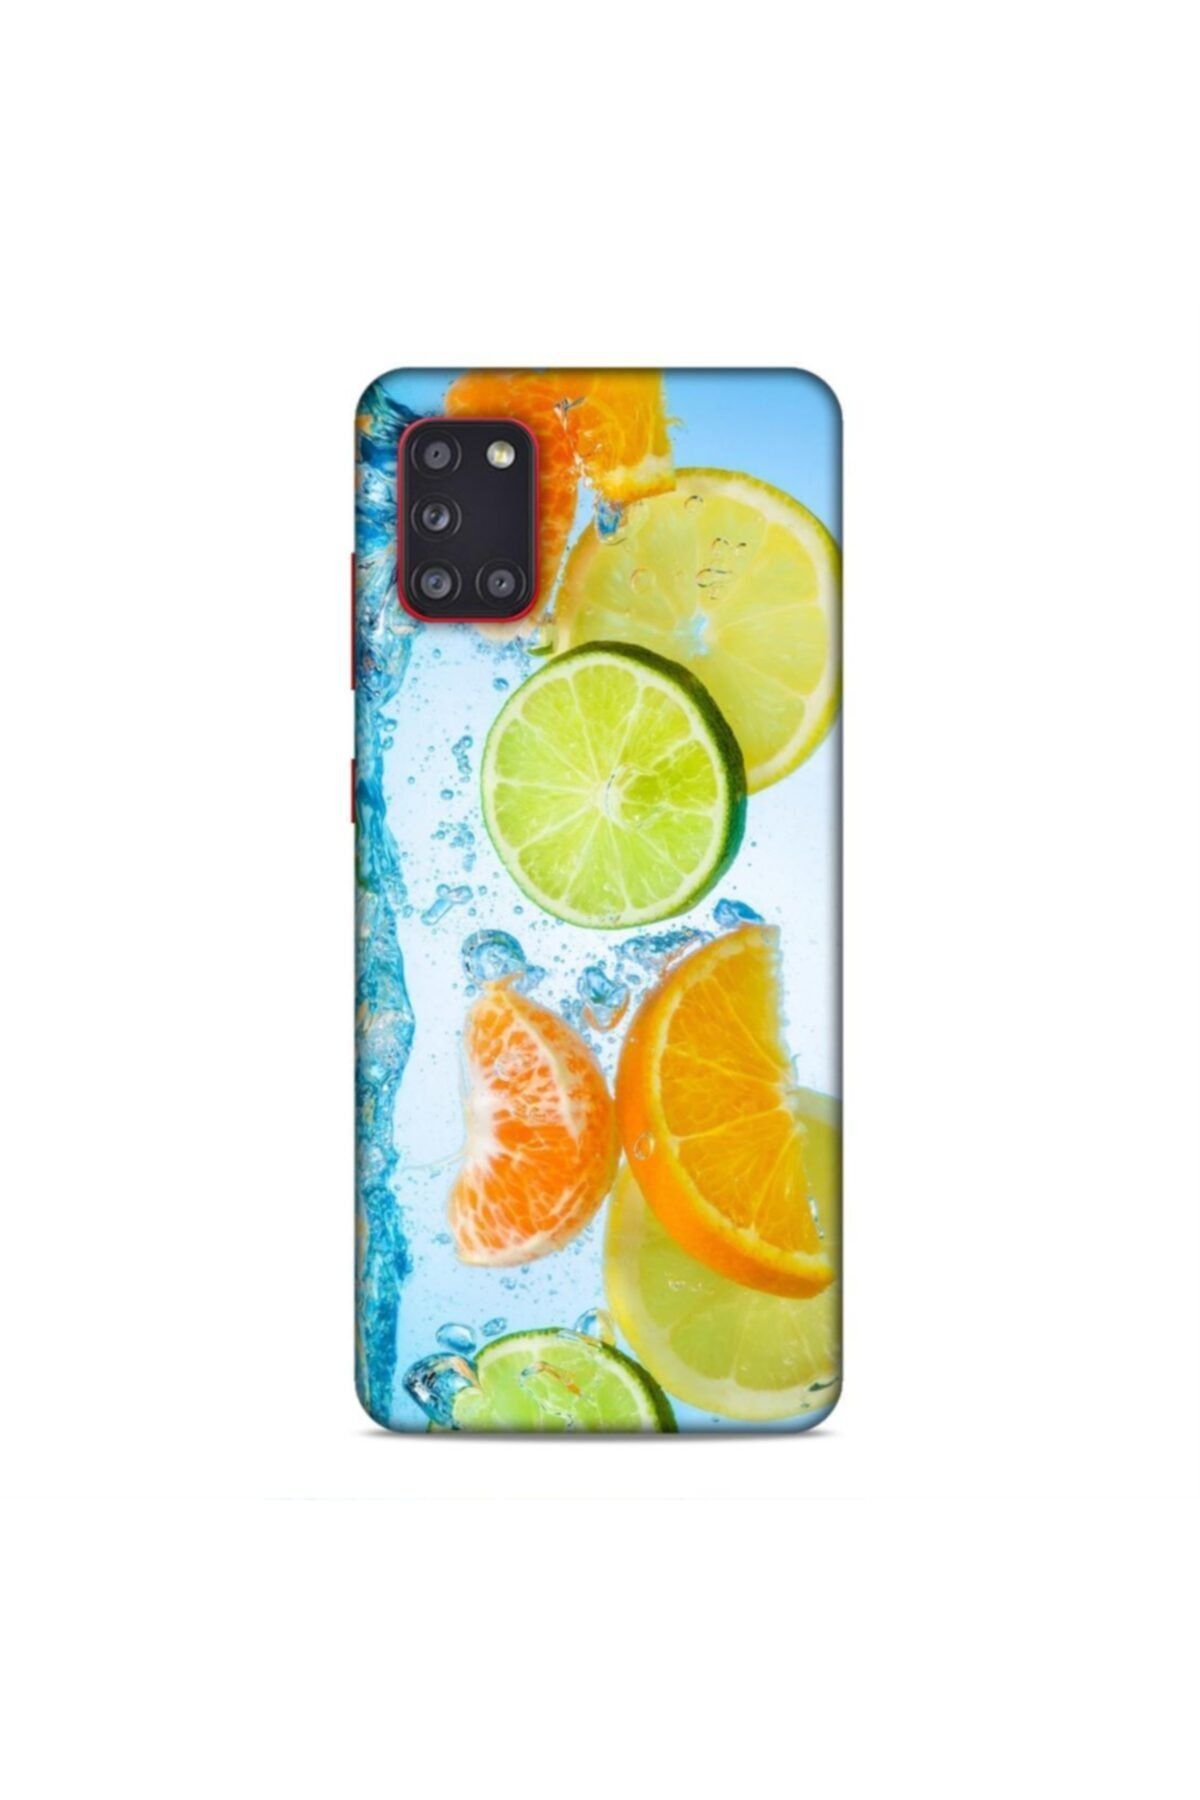 Pickcase Samsung Galaxy A31 Kılıf Desenli Arka Kapak Limonlar